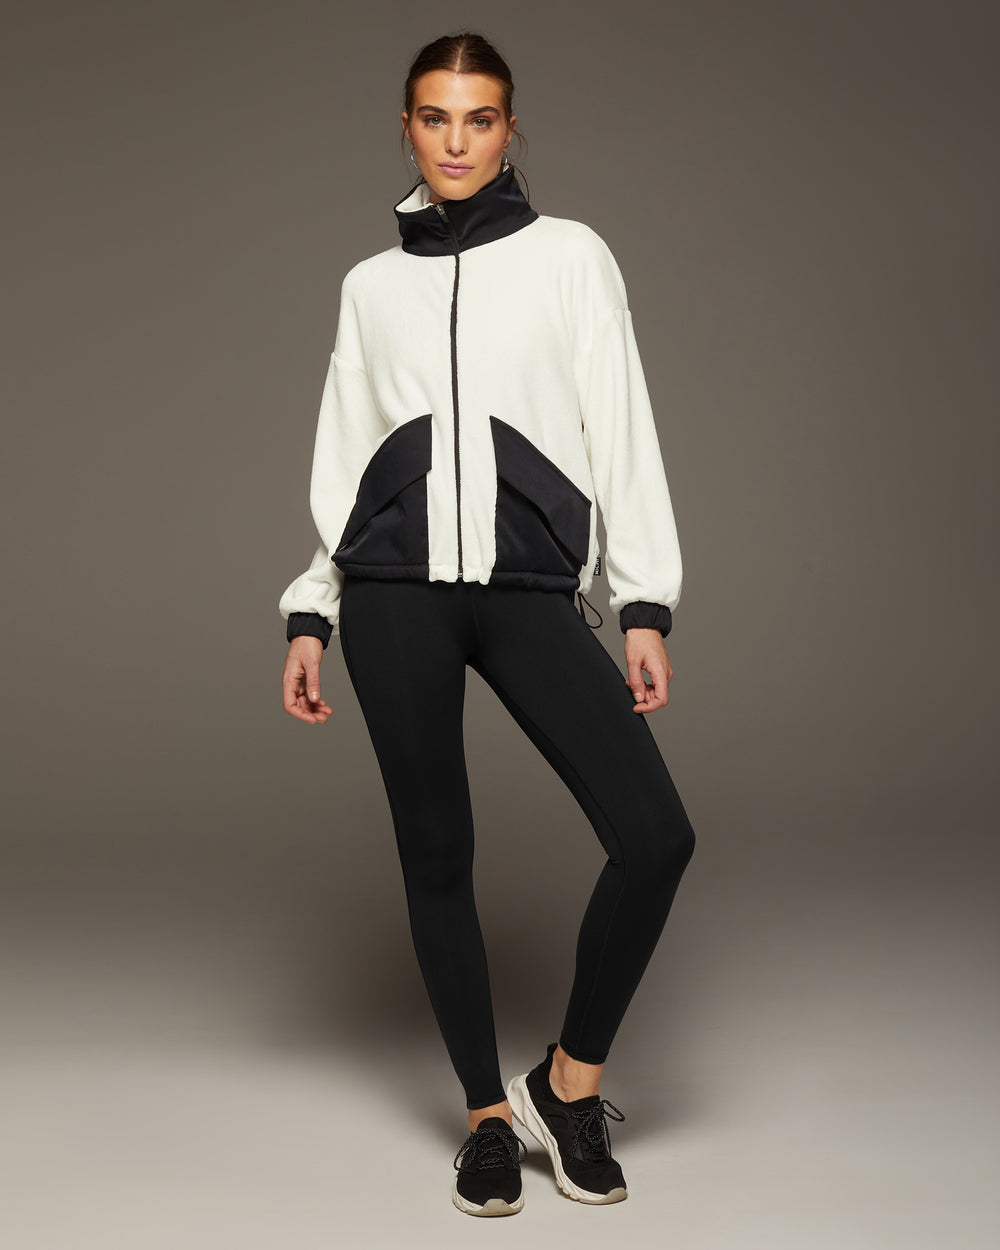 Shop the MICHI Powder Jacket | Women's Designer Activewear